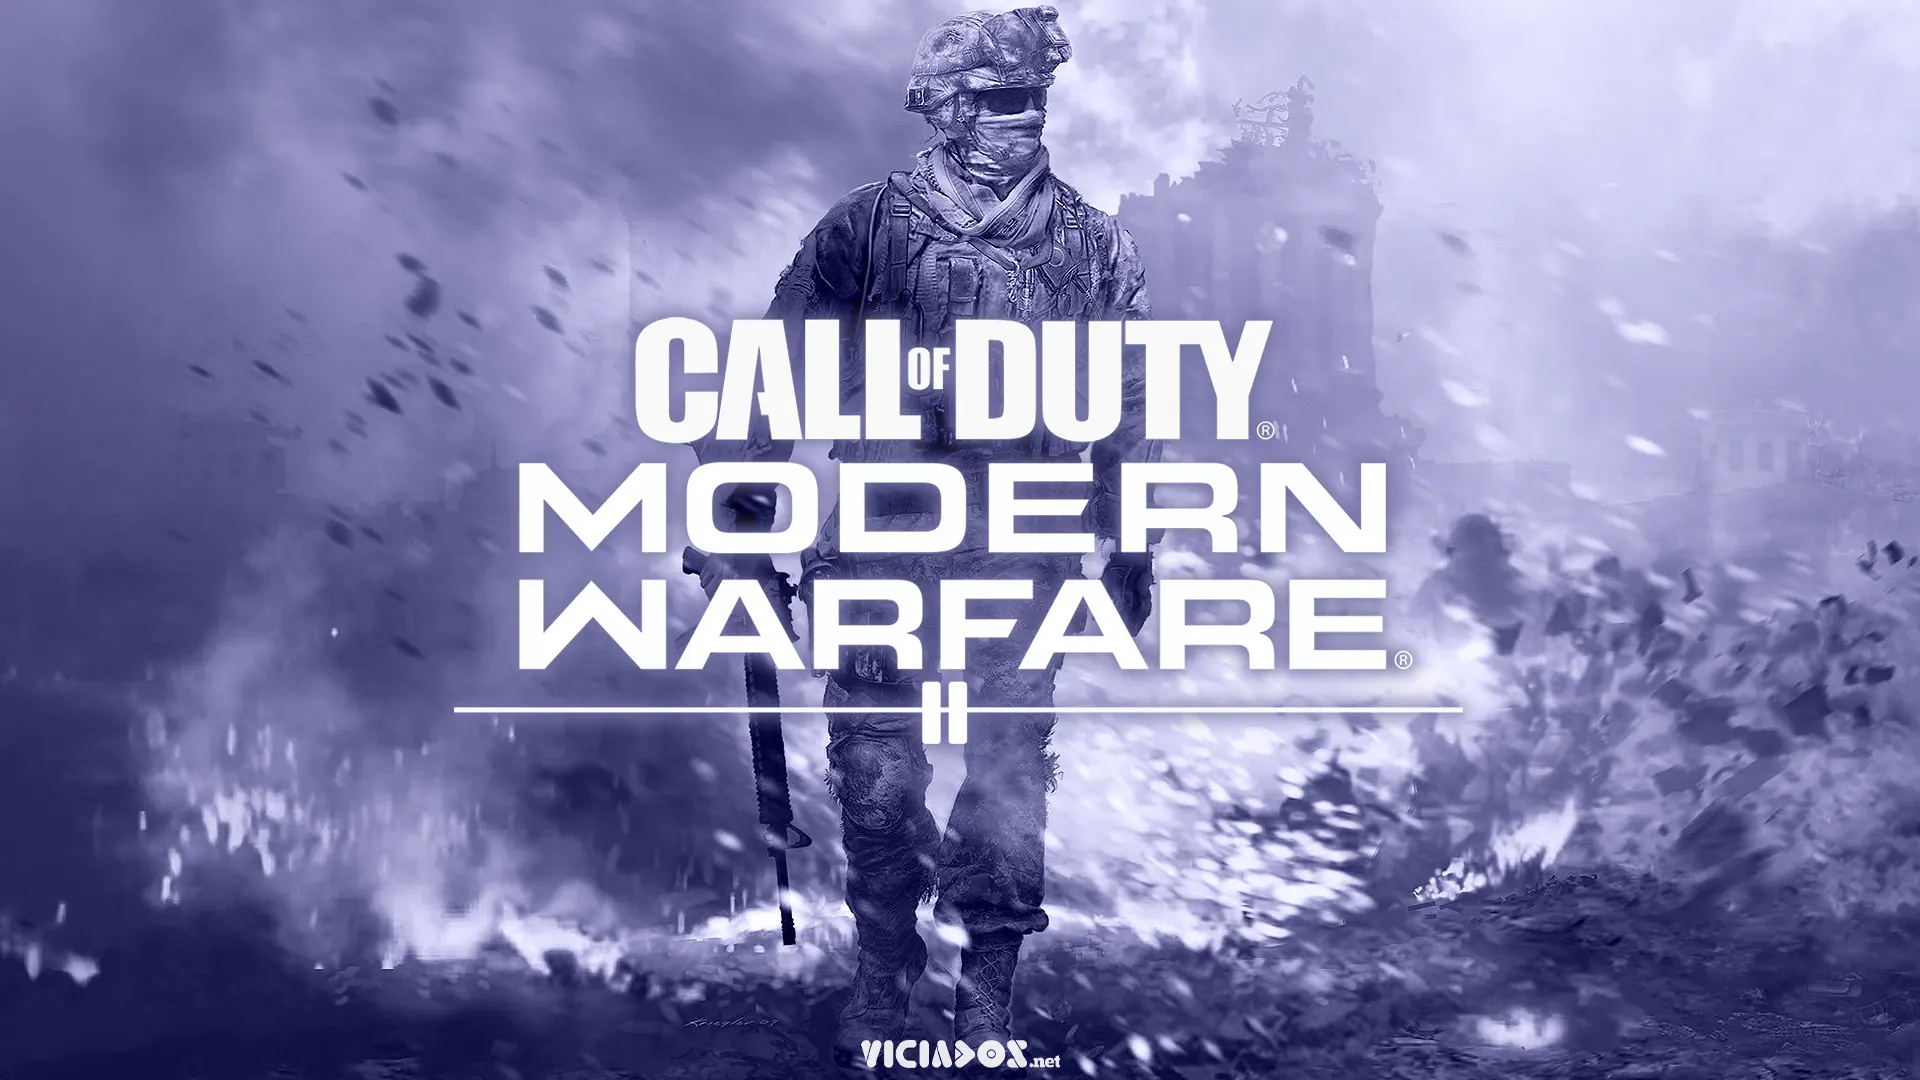 Activision comenta sobre adiamento de Call of Duty: Modern Warfare II 2022 Viciados